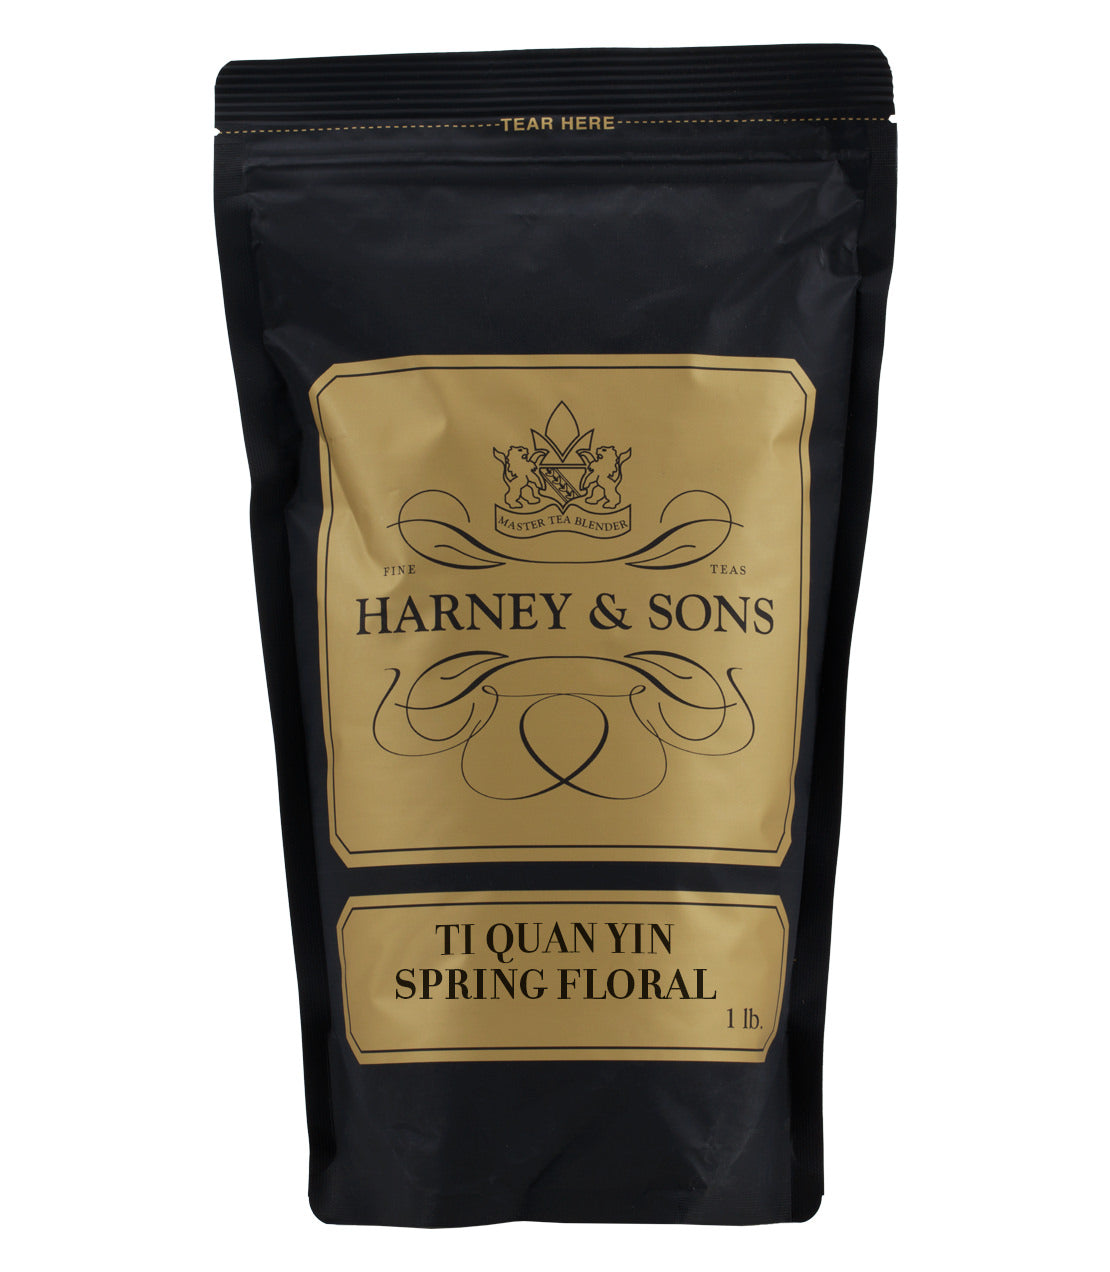 Ti Quan Yin Spring Floral - Loose 1 lb. Bag - Harney & Sons Fine Teas